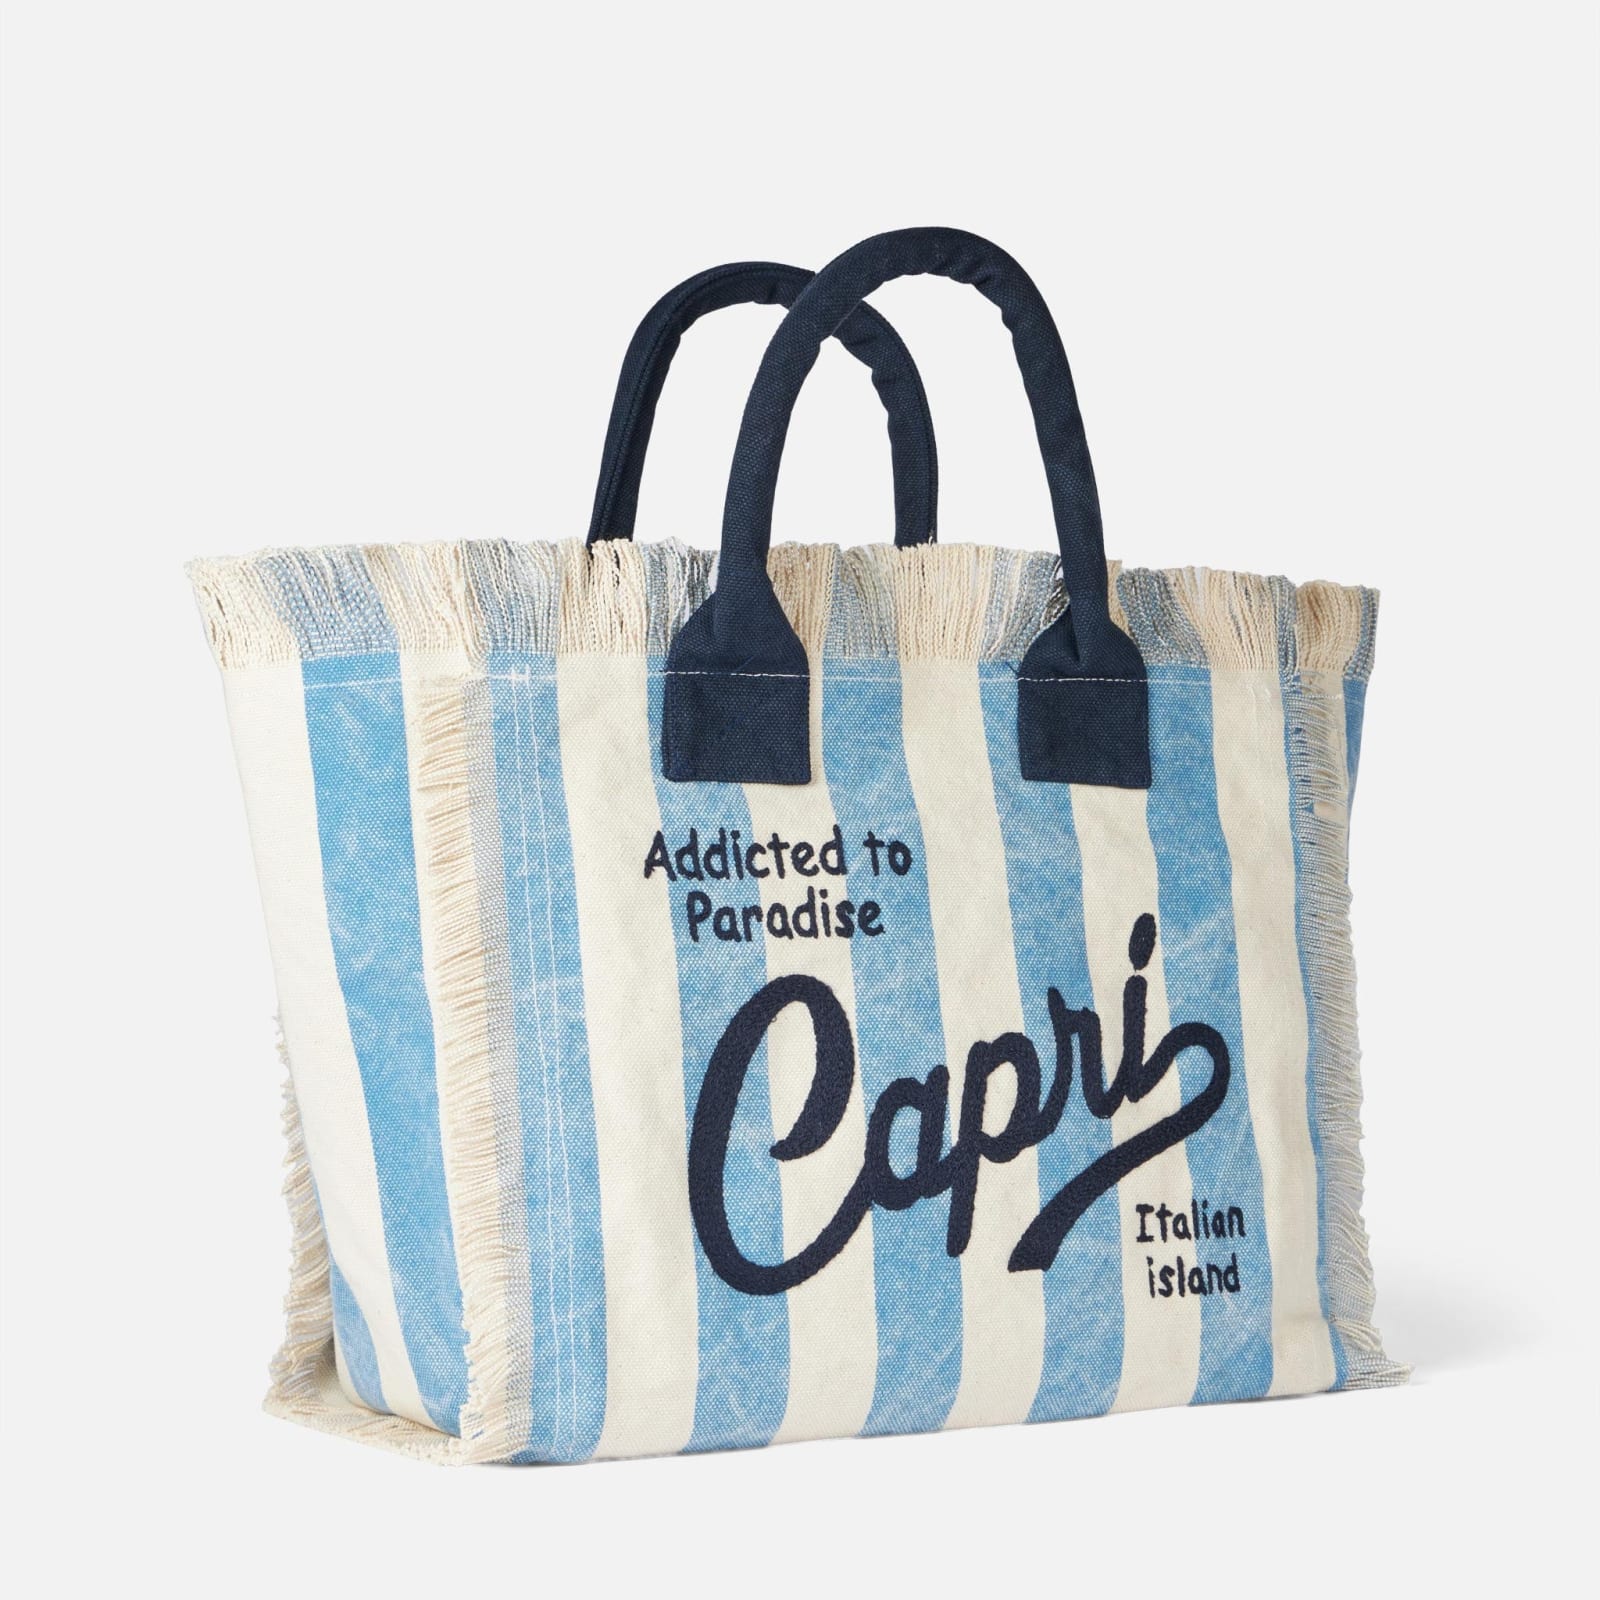 Shop Mc2 Saint Barth Vanity Canvas Shoulder Bag With Capri Print In Blue